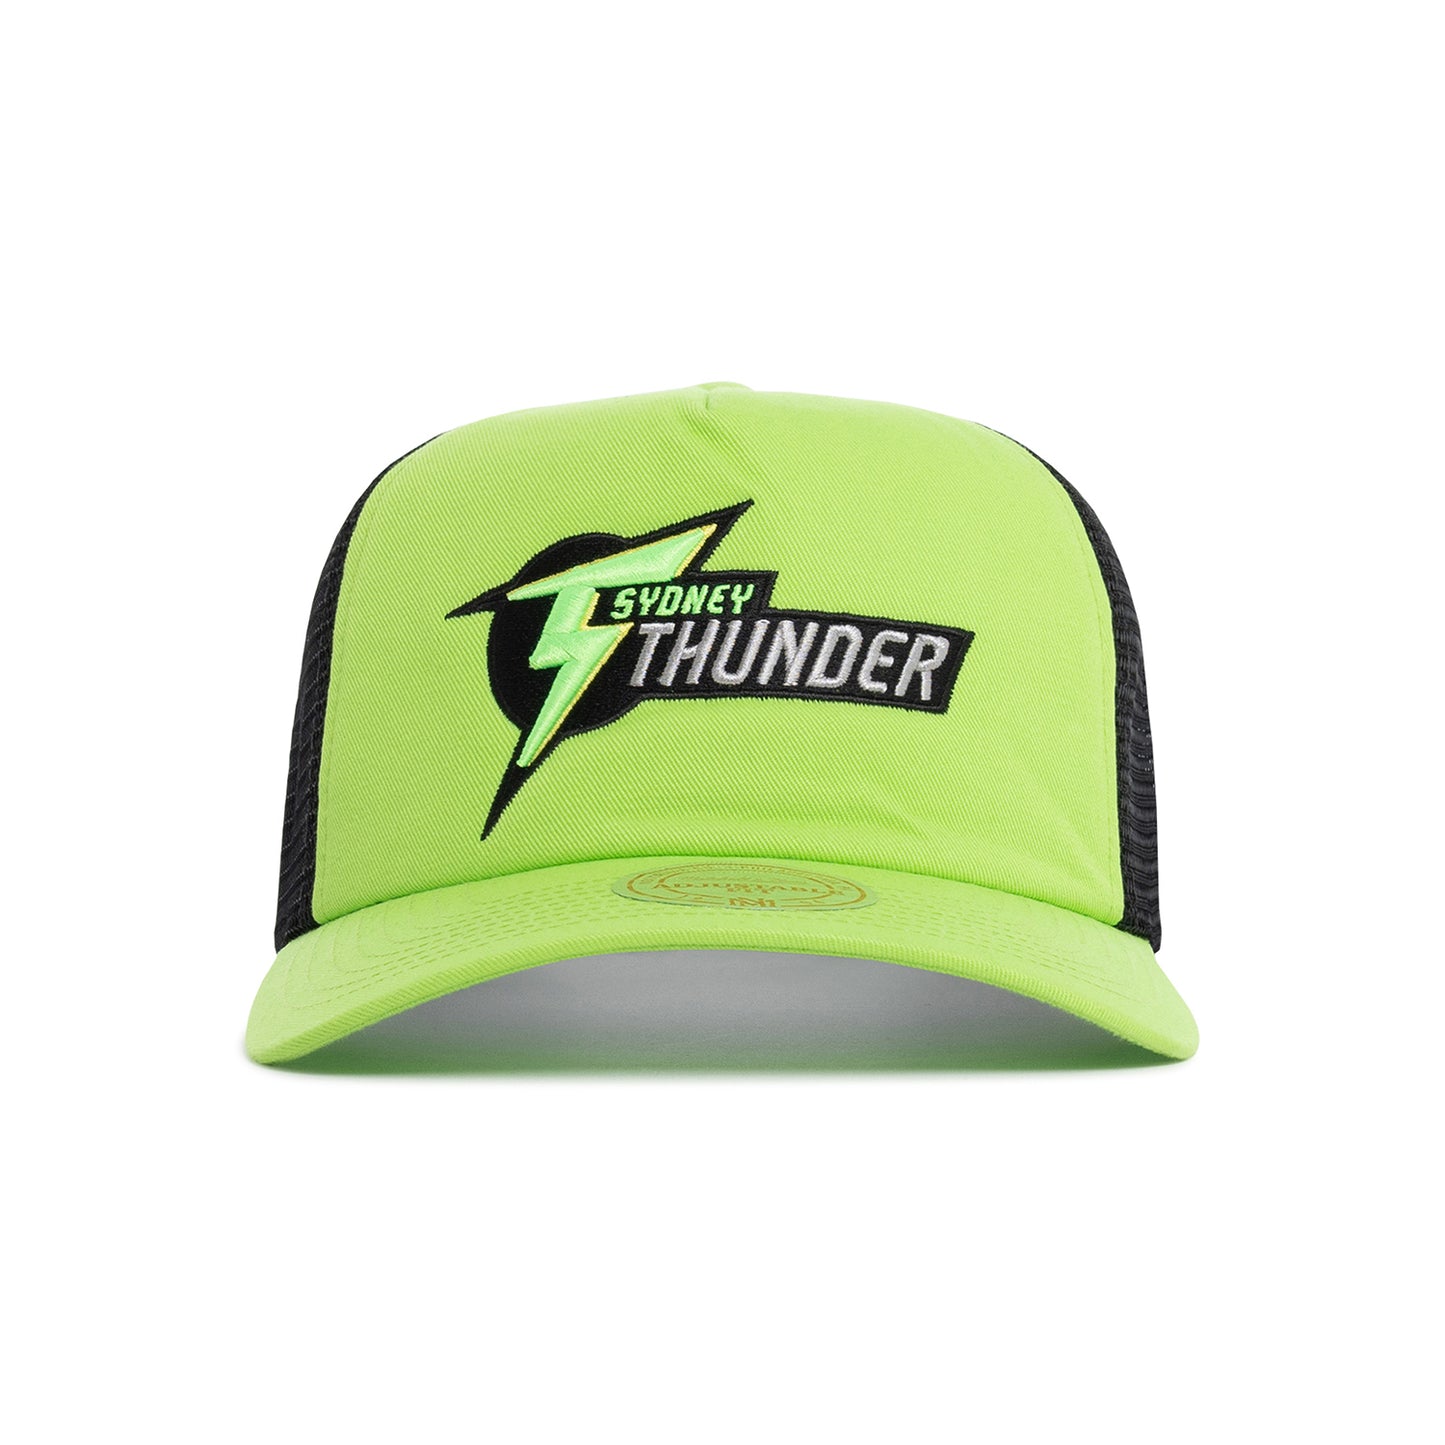 Sydney Thunder Kids BBL Patch Trucker Cap